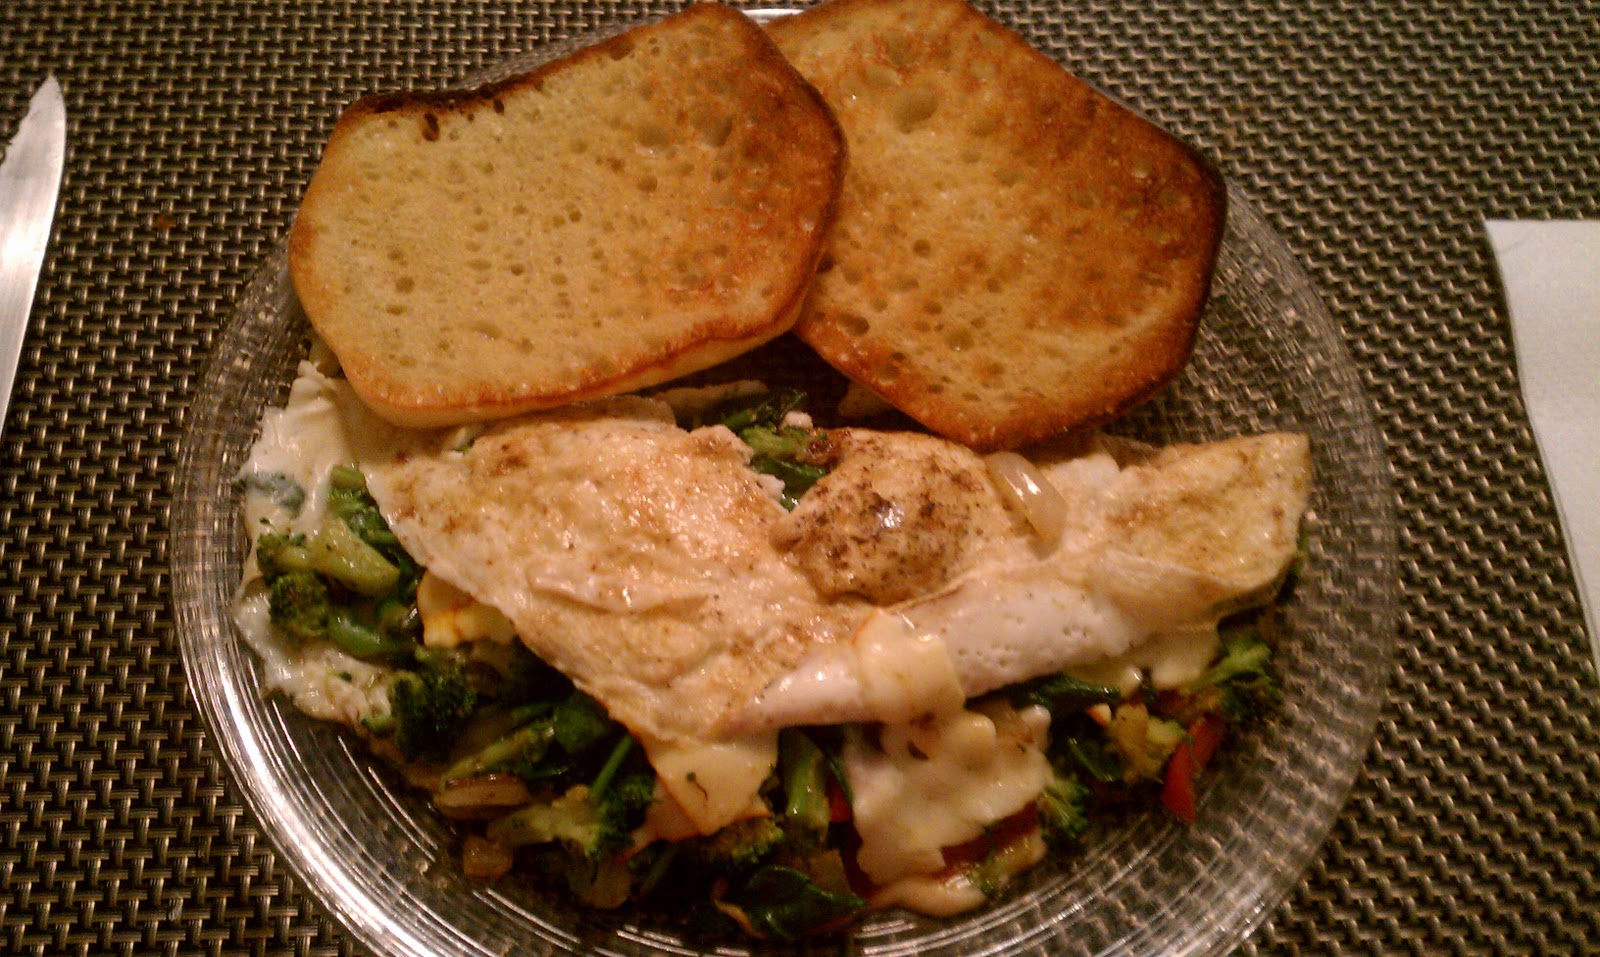 http://2.bp.blogspot.com/-4QXkkU532L4/Twr5GffvzPI/AAAAAAAAA-M/12Q1z6vq-r8/s1600/Veggie+Egg+White+Omelette+and+Toast.jpg